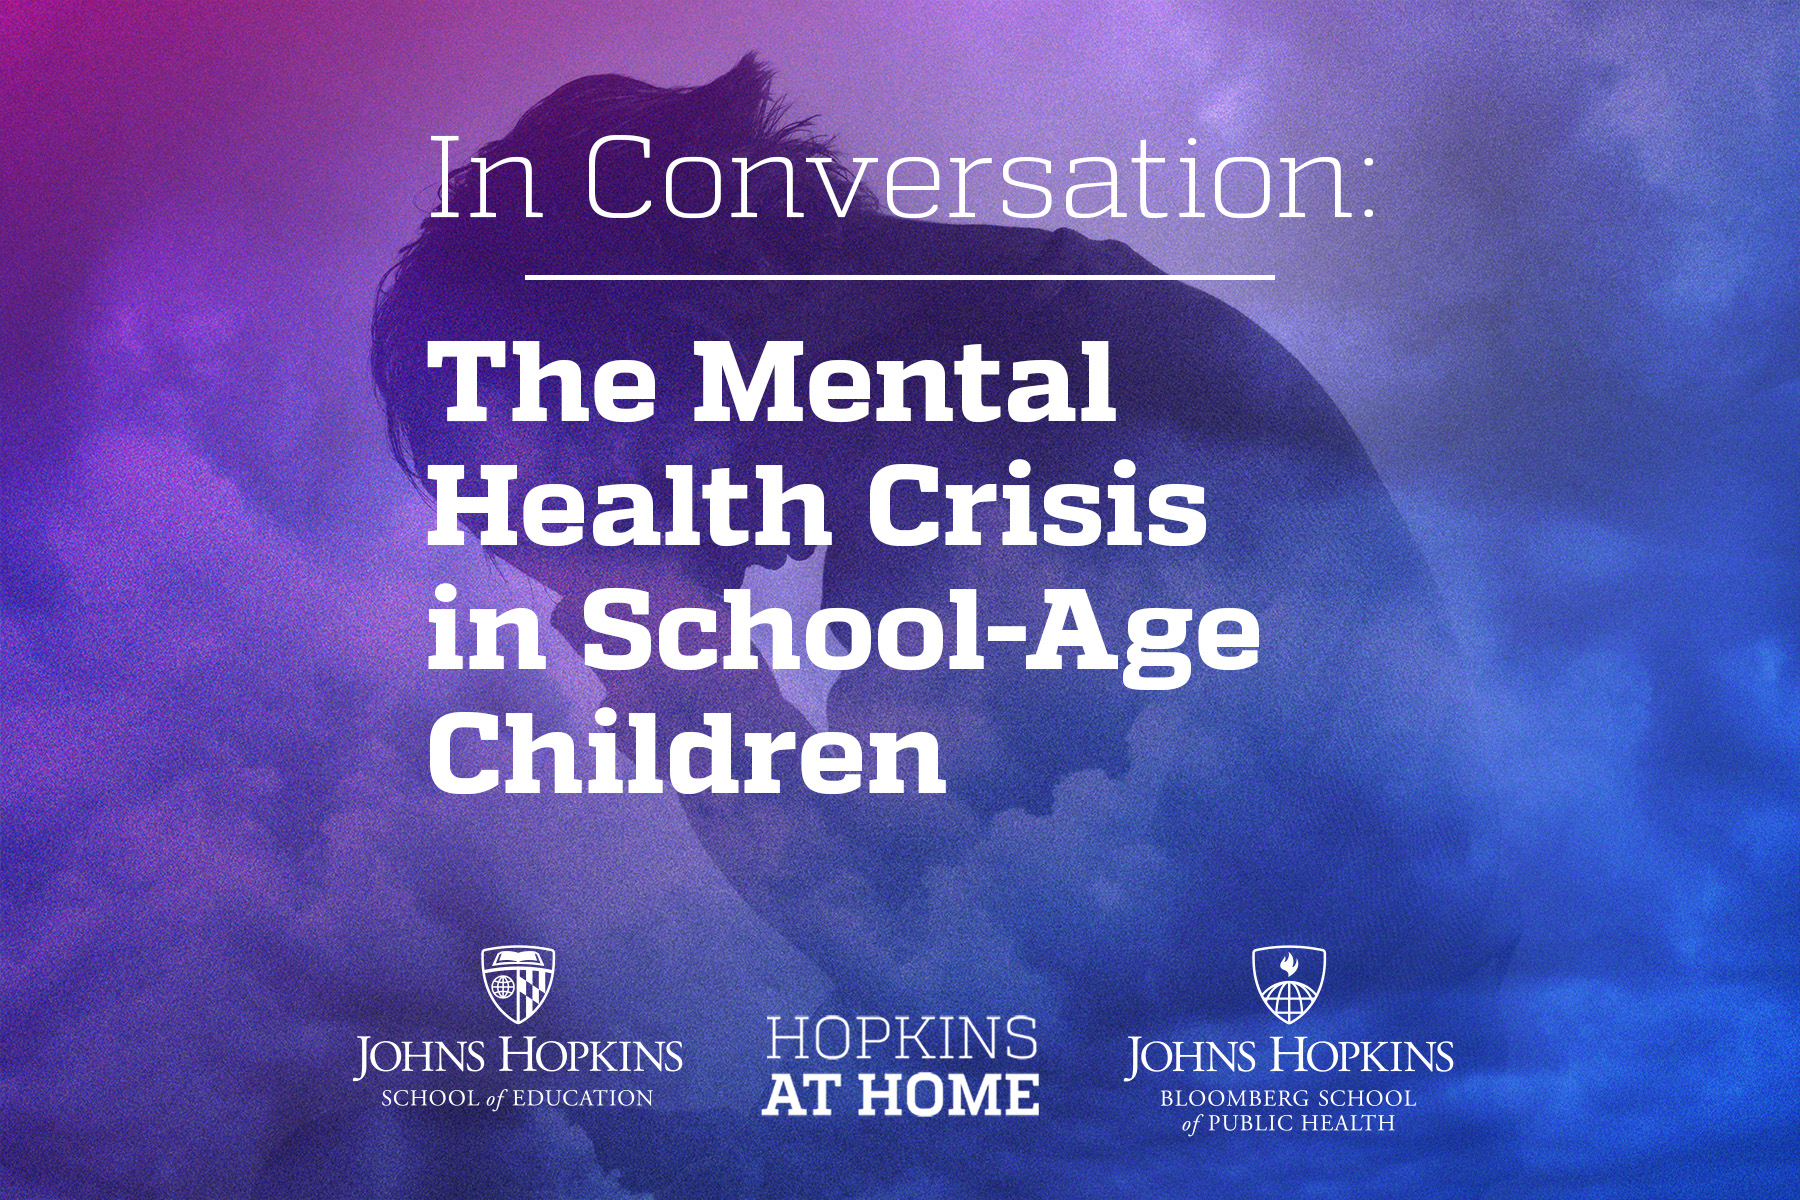 In Conversation: The Mental Health Crisis in School-Age Children